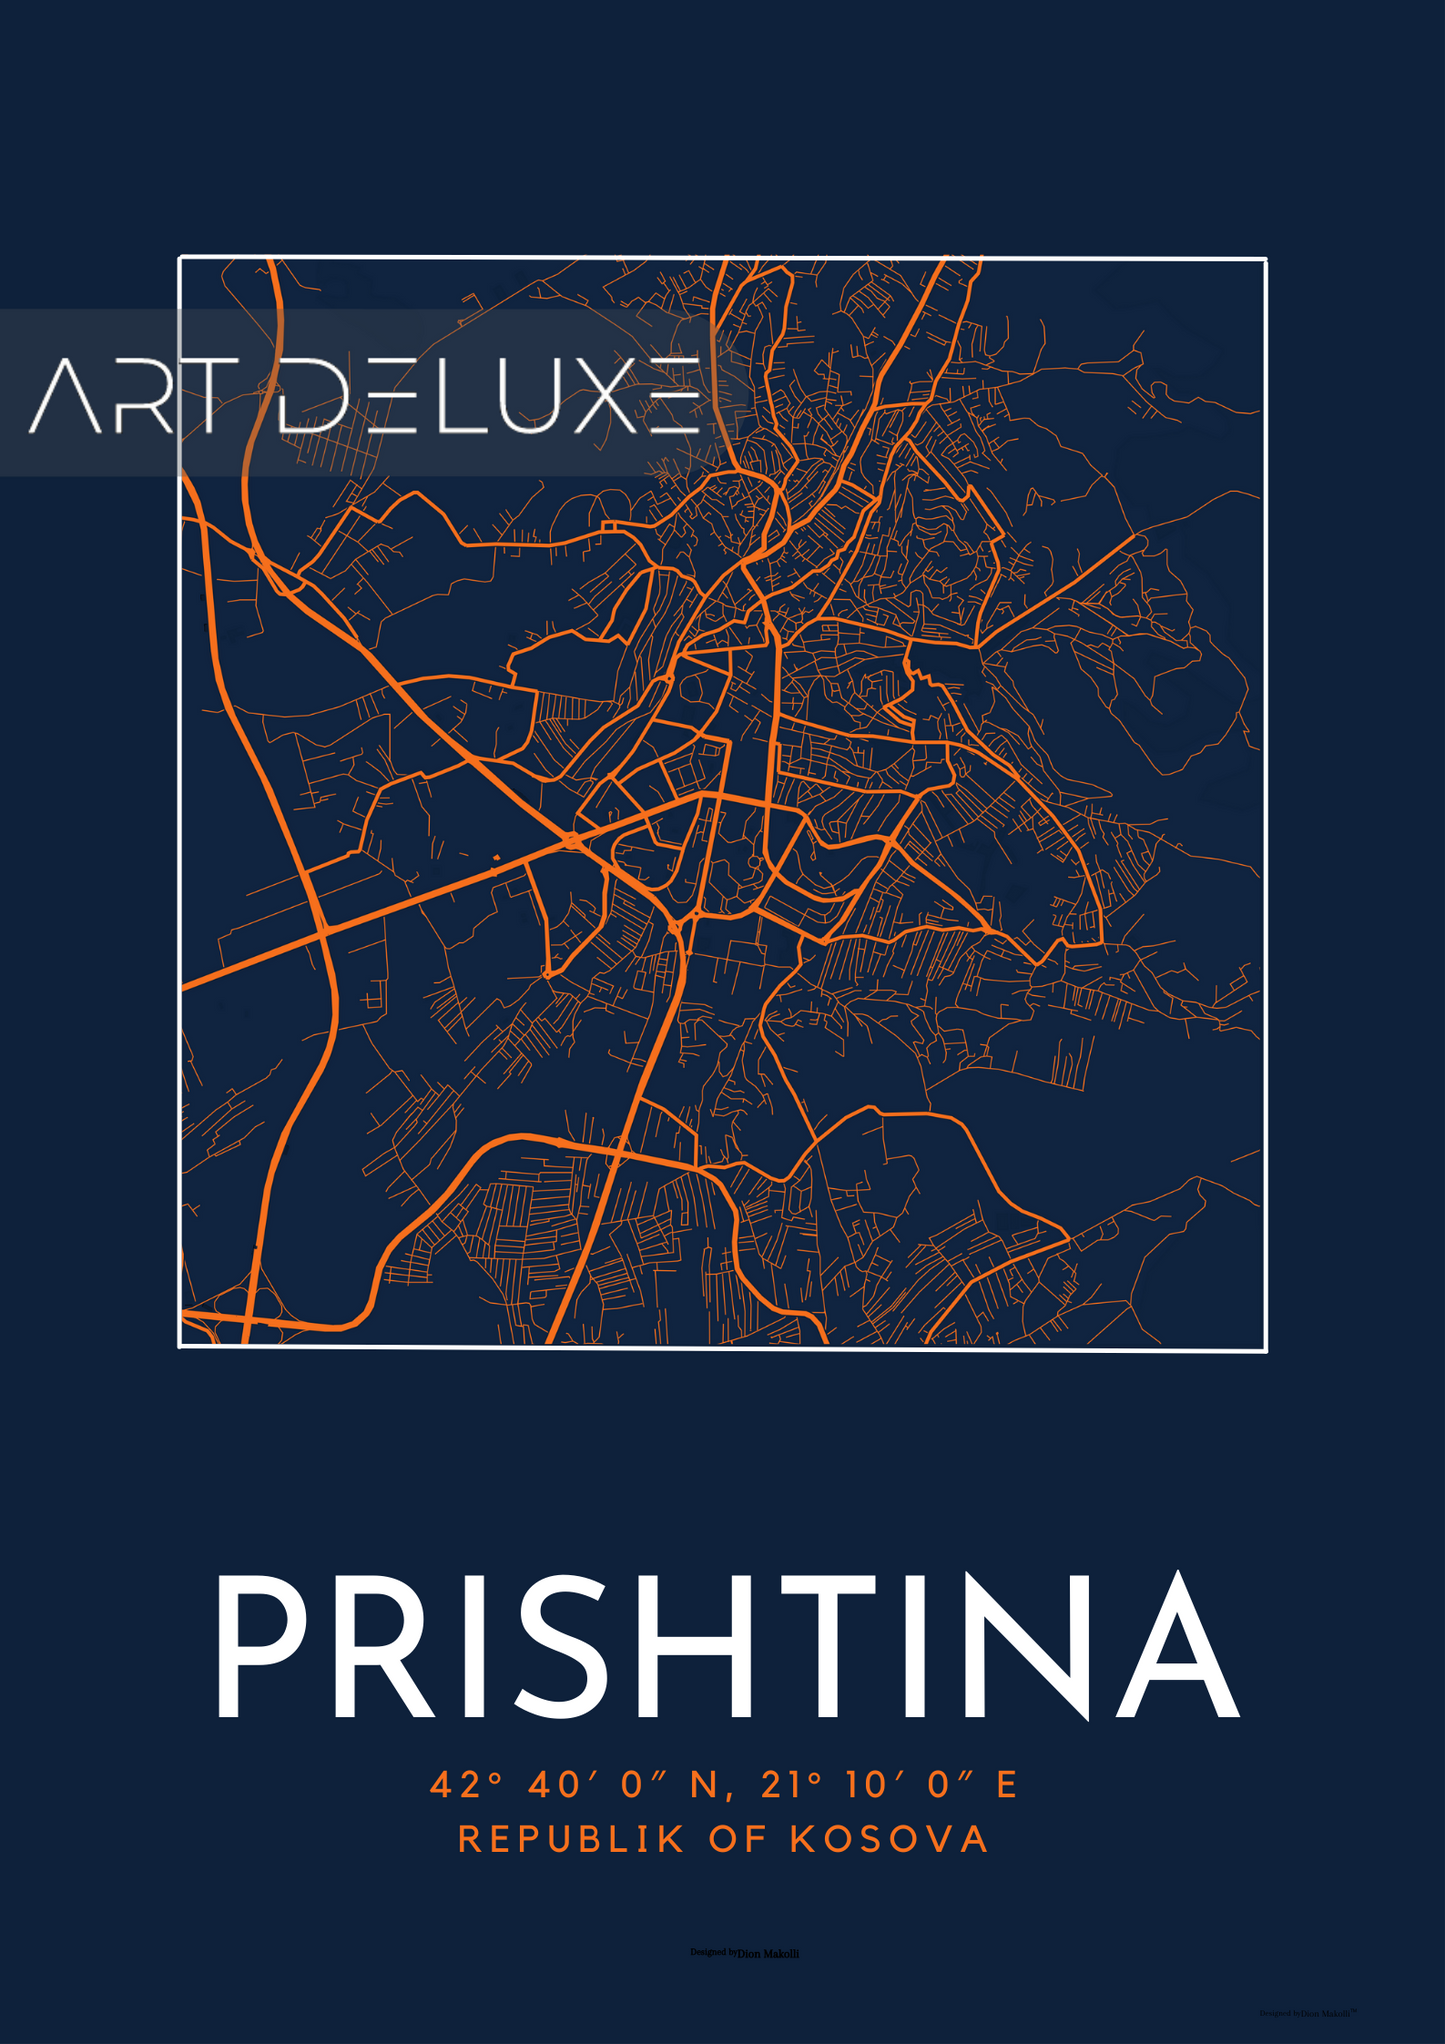 Prishtina - Deluxe